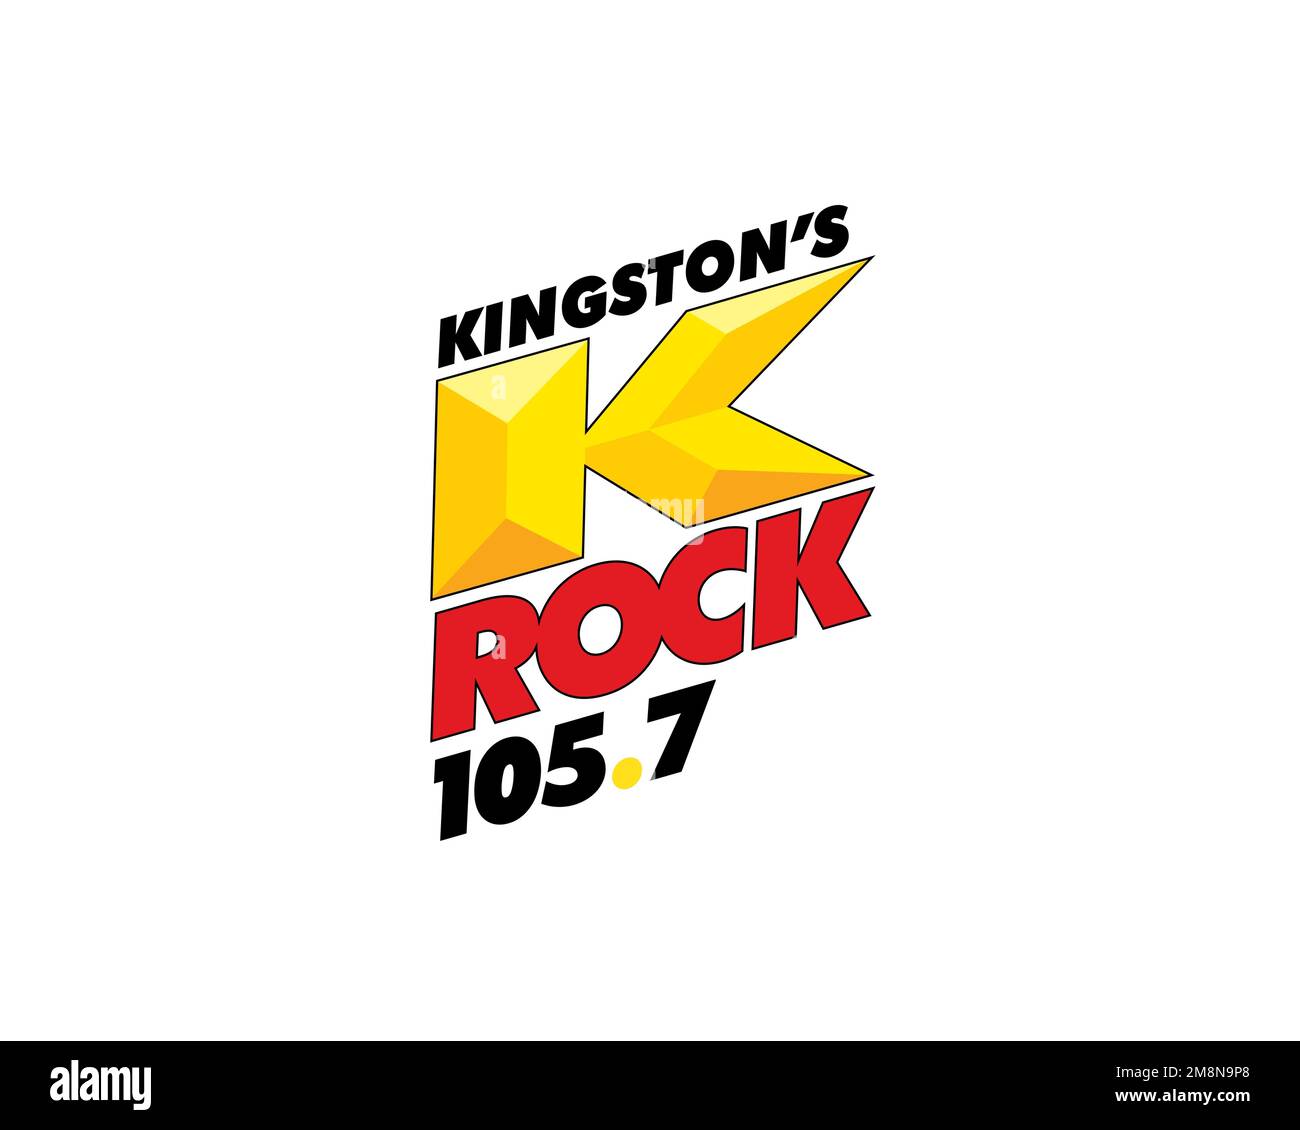 CIKR FM, rotated logo, white background Stock Photo